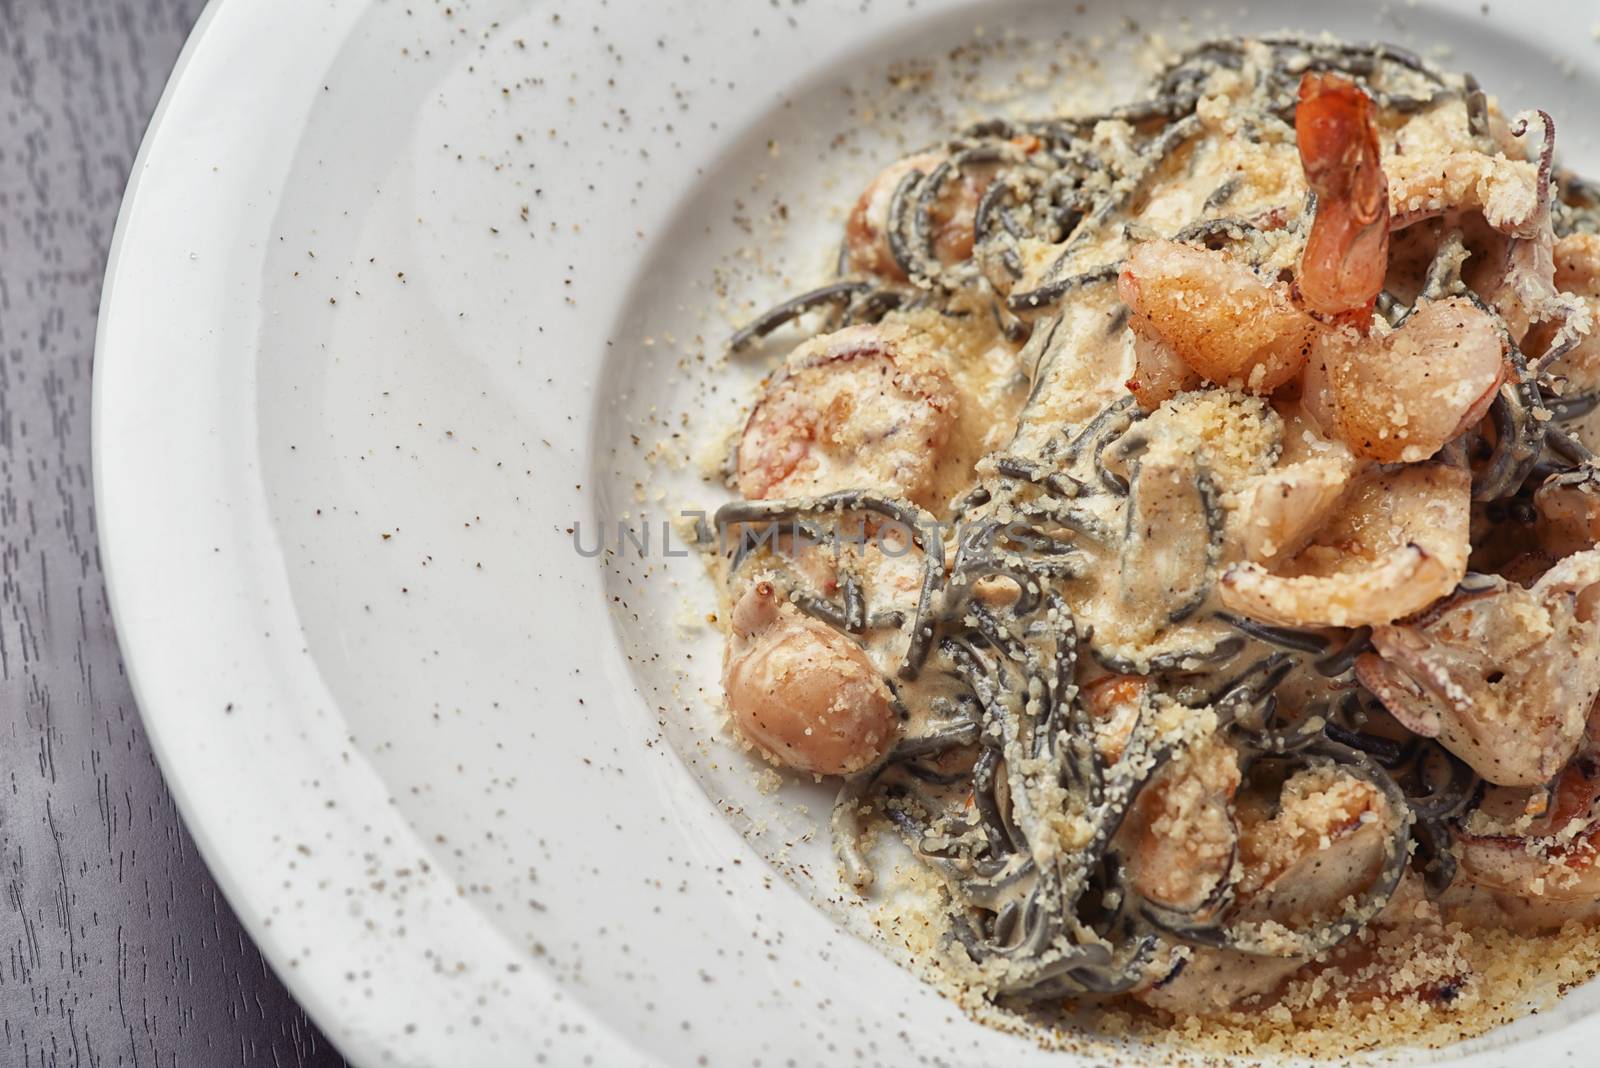 Italian black spaghetti with scallops, shrimp and octopus by shivanetua